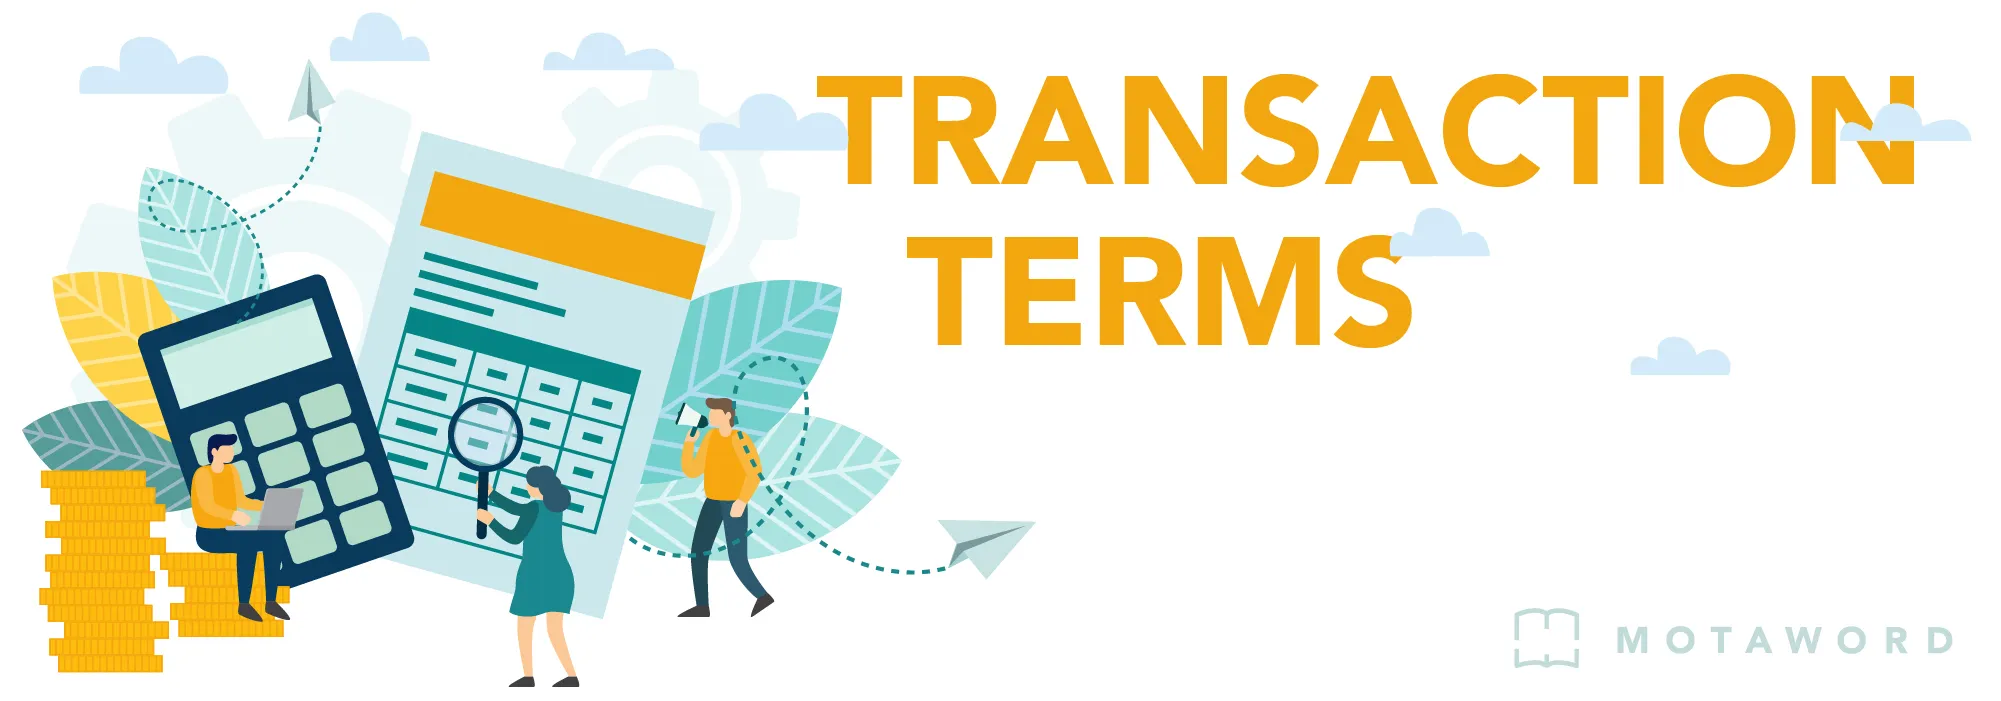 transaction terms